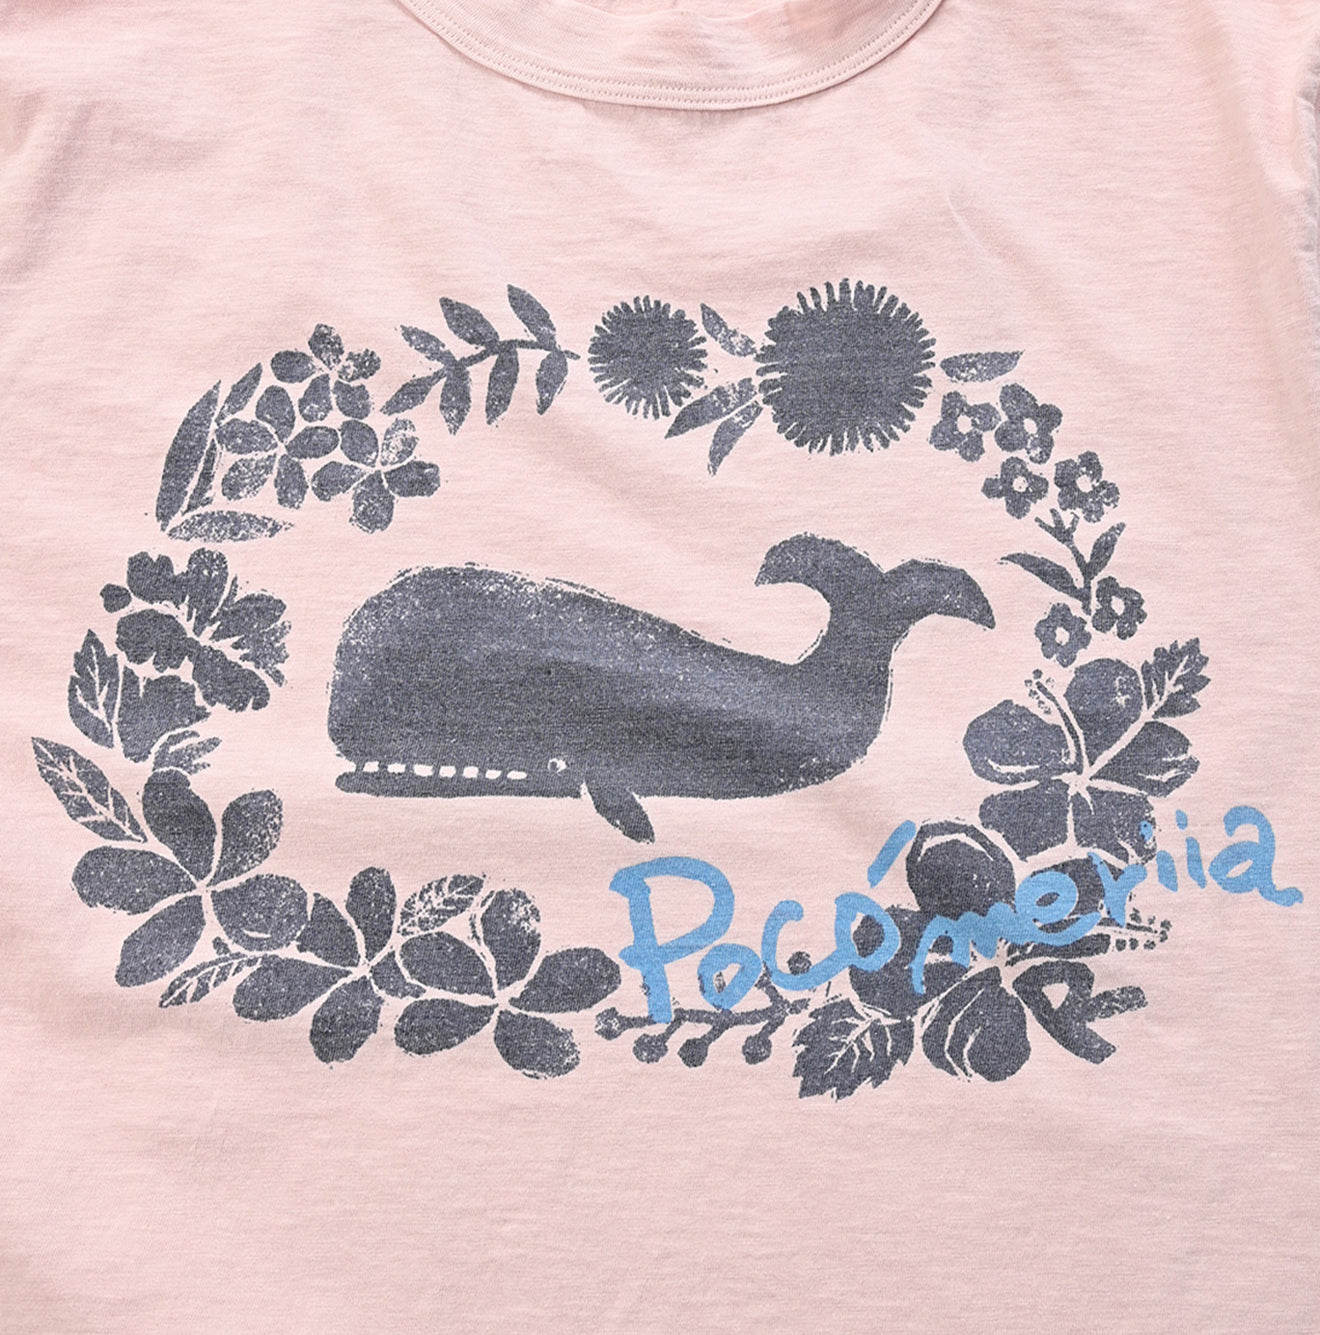 908 Pocomeriia T恤